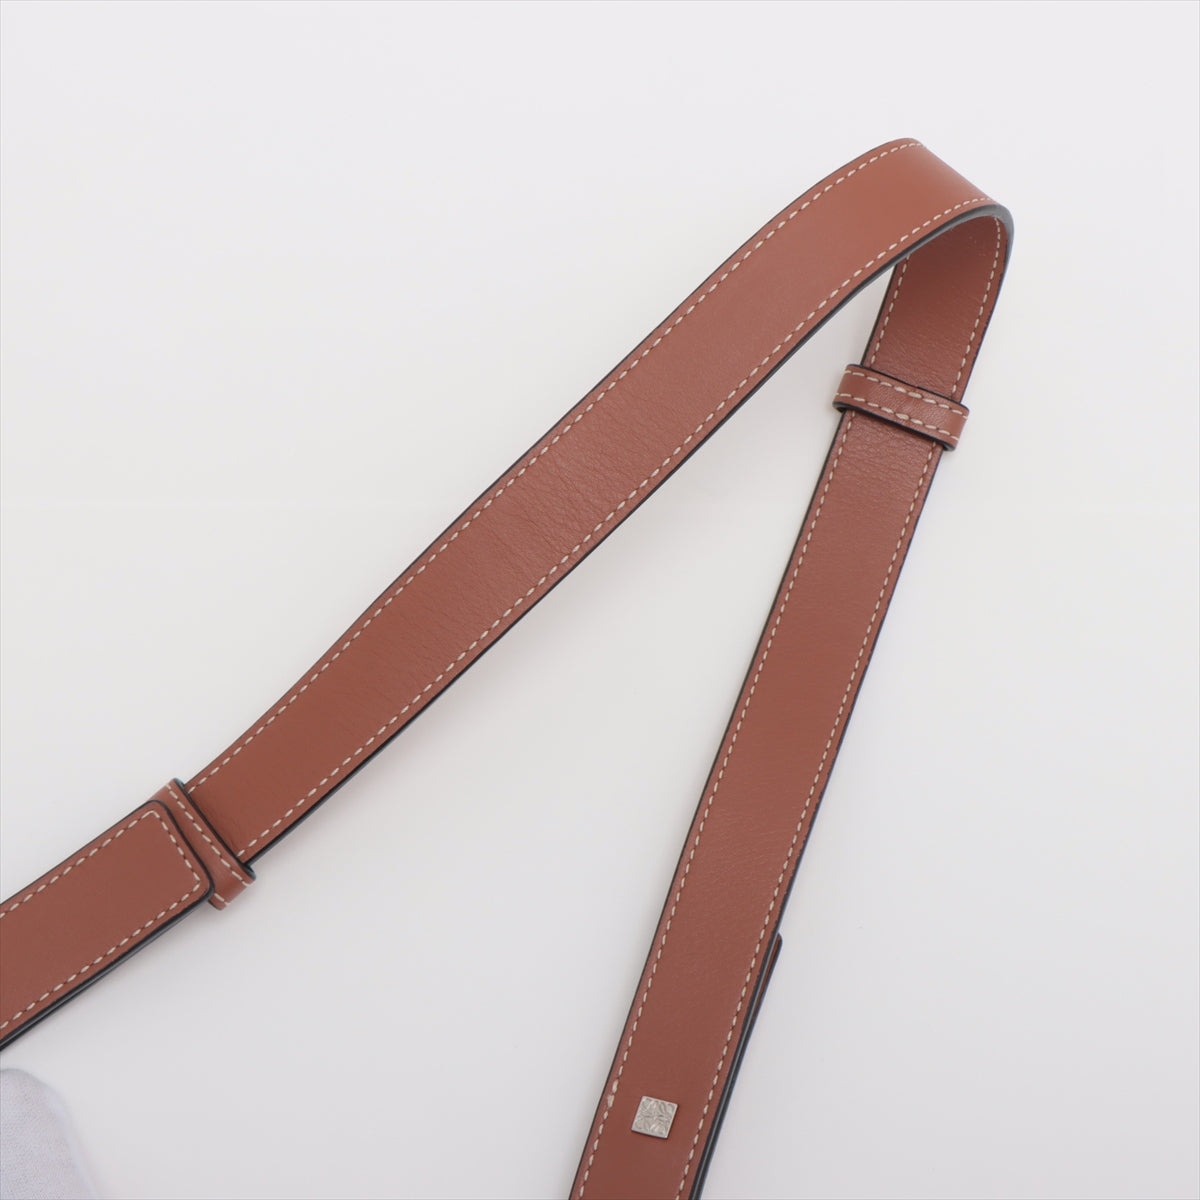 Loewe Hammock Small Leather 2WAY Handbag Multi-Color